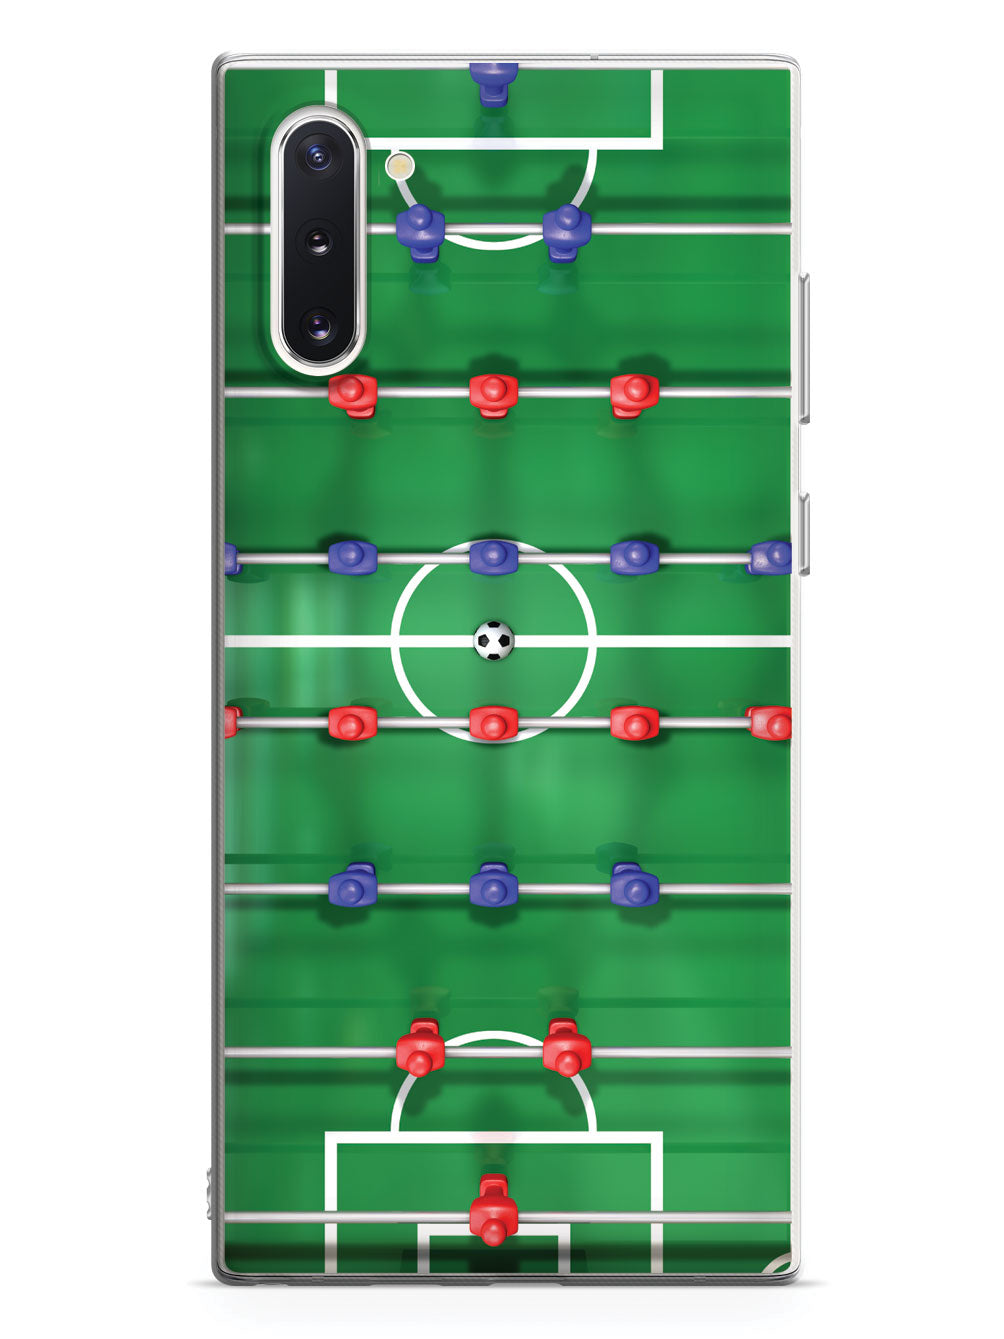 Foosball Table - Table Football, Soccer Game Case